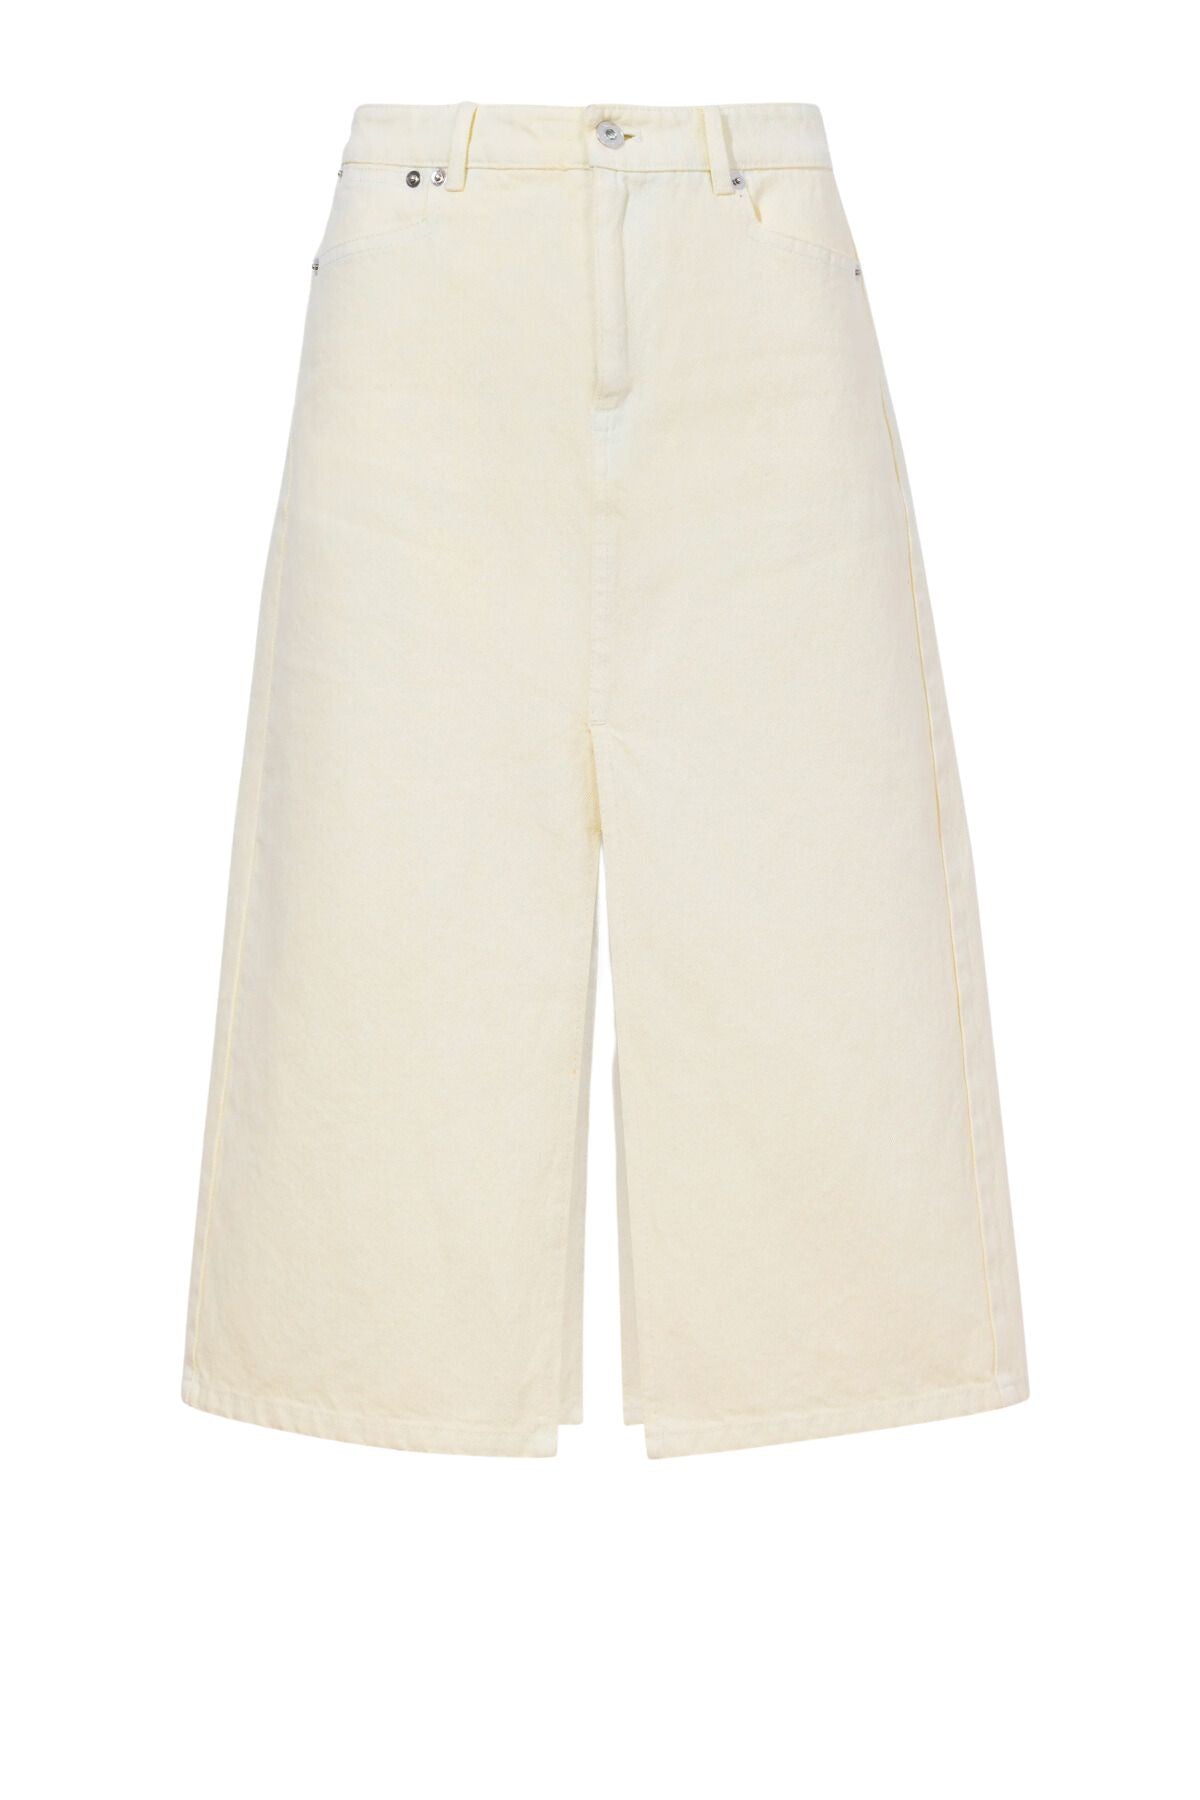 Proenza Schouler White Label Sloan Skirt - Parchment